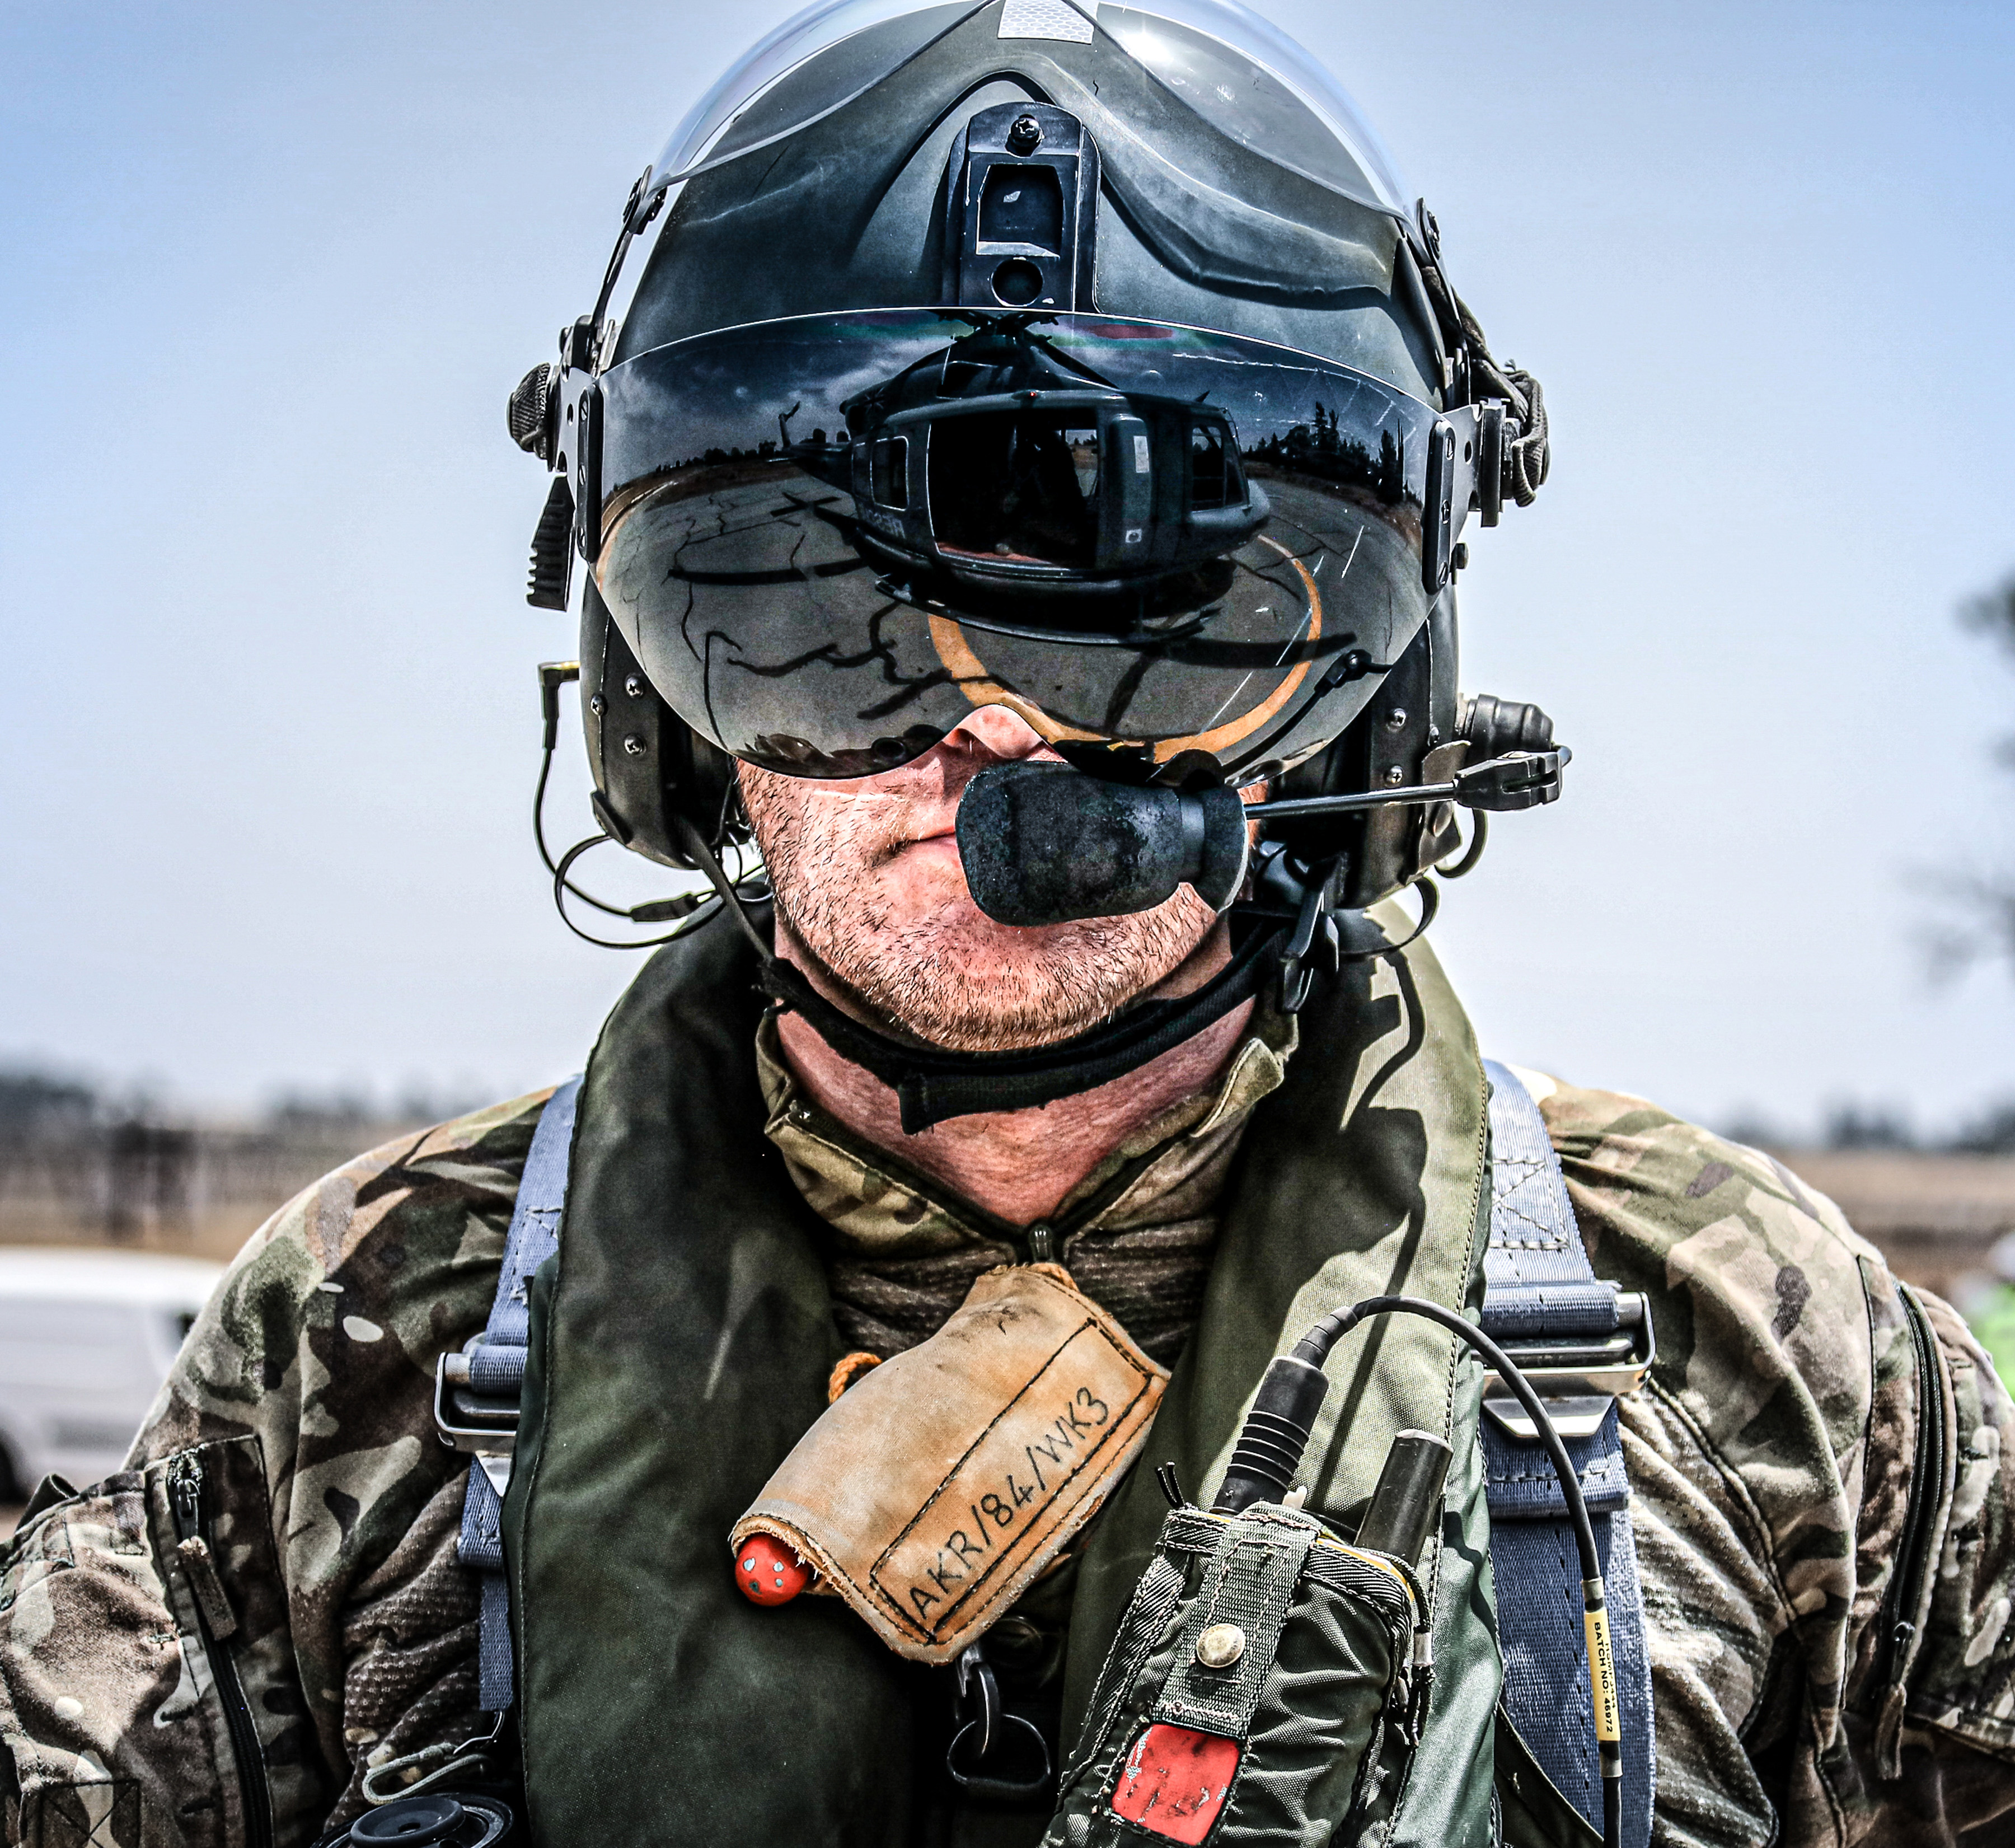 Aviator wears specialist head gear with radio.